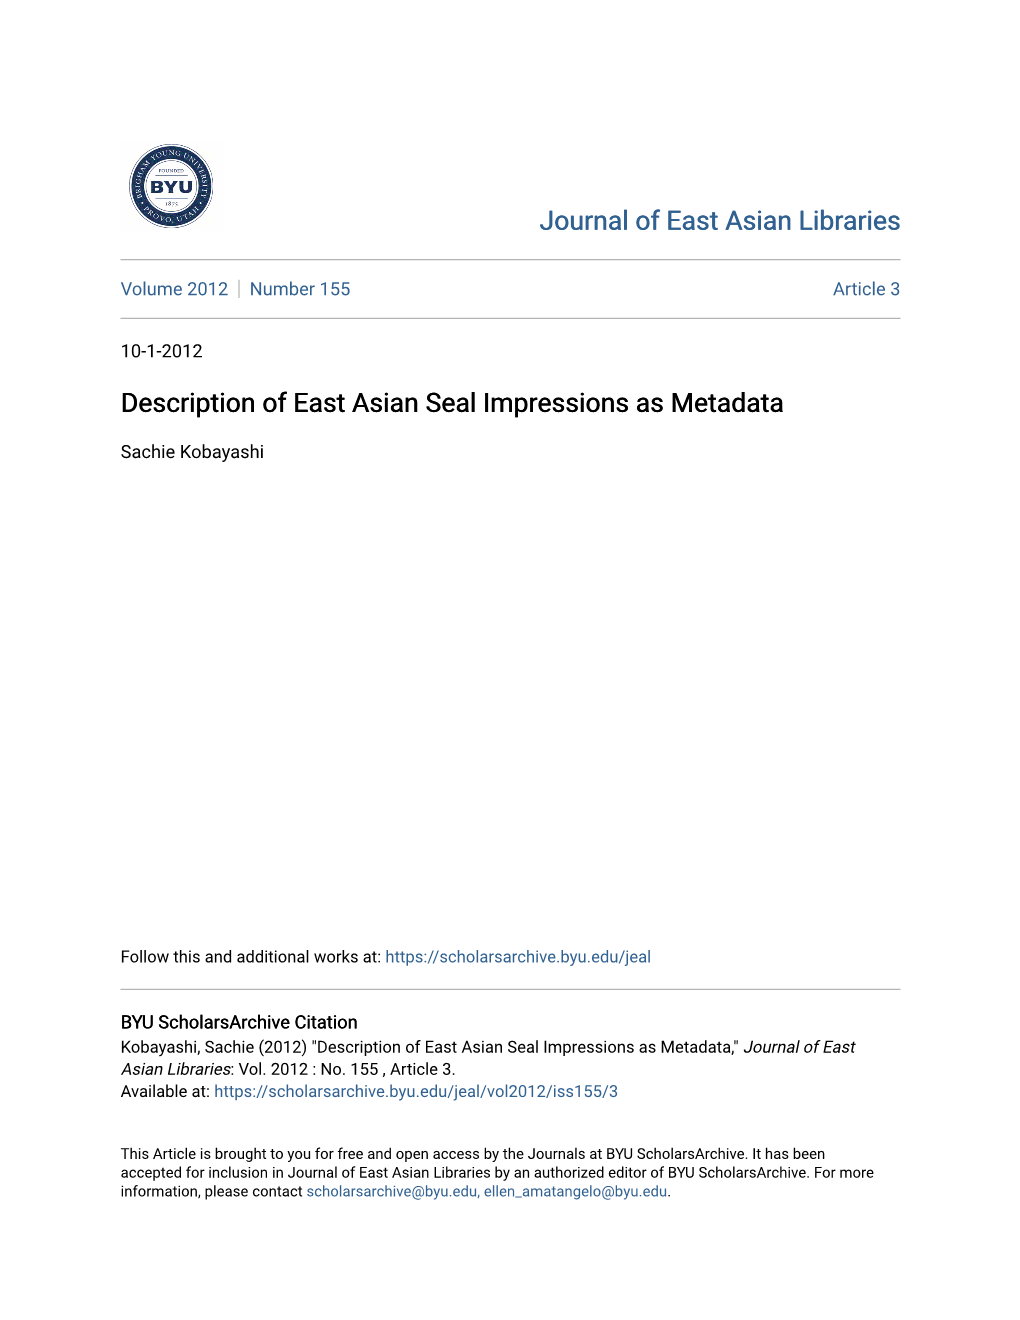 Description of East Asian Seal Impressions As Metadata